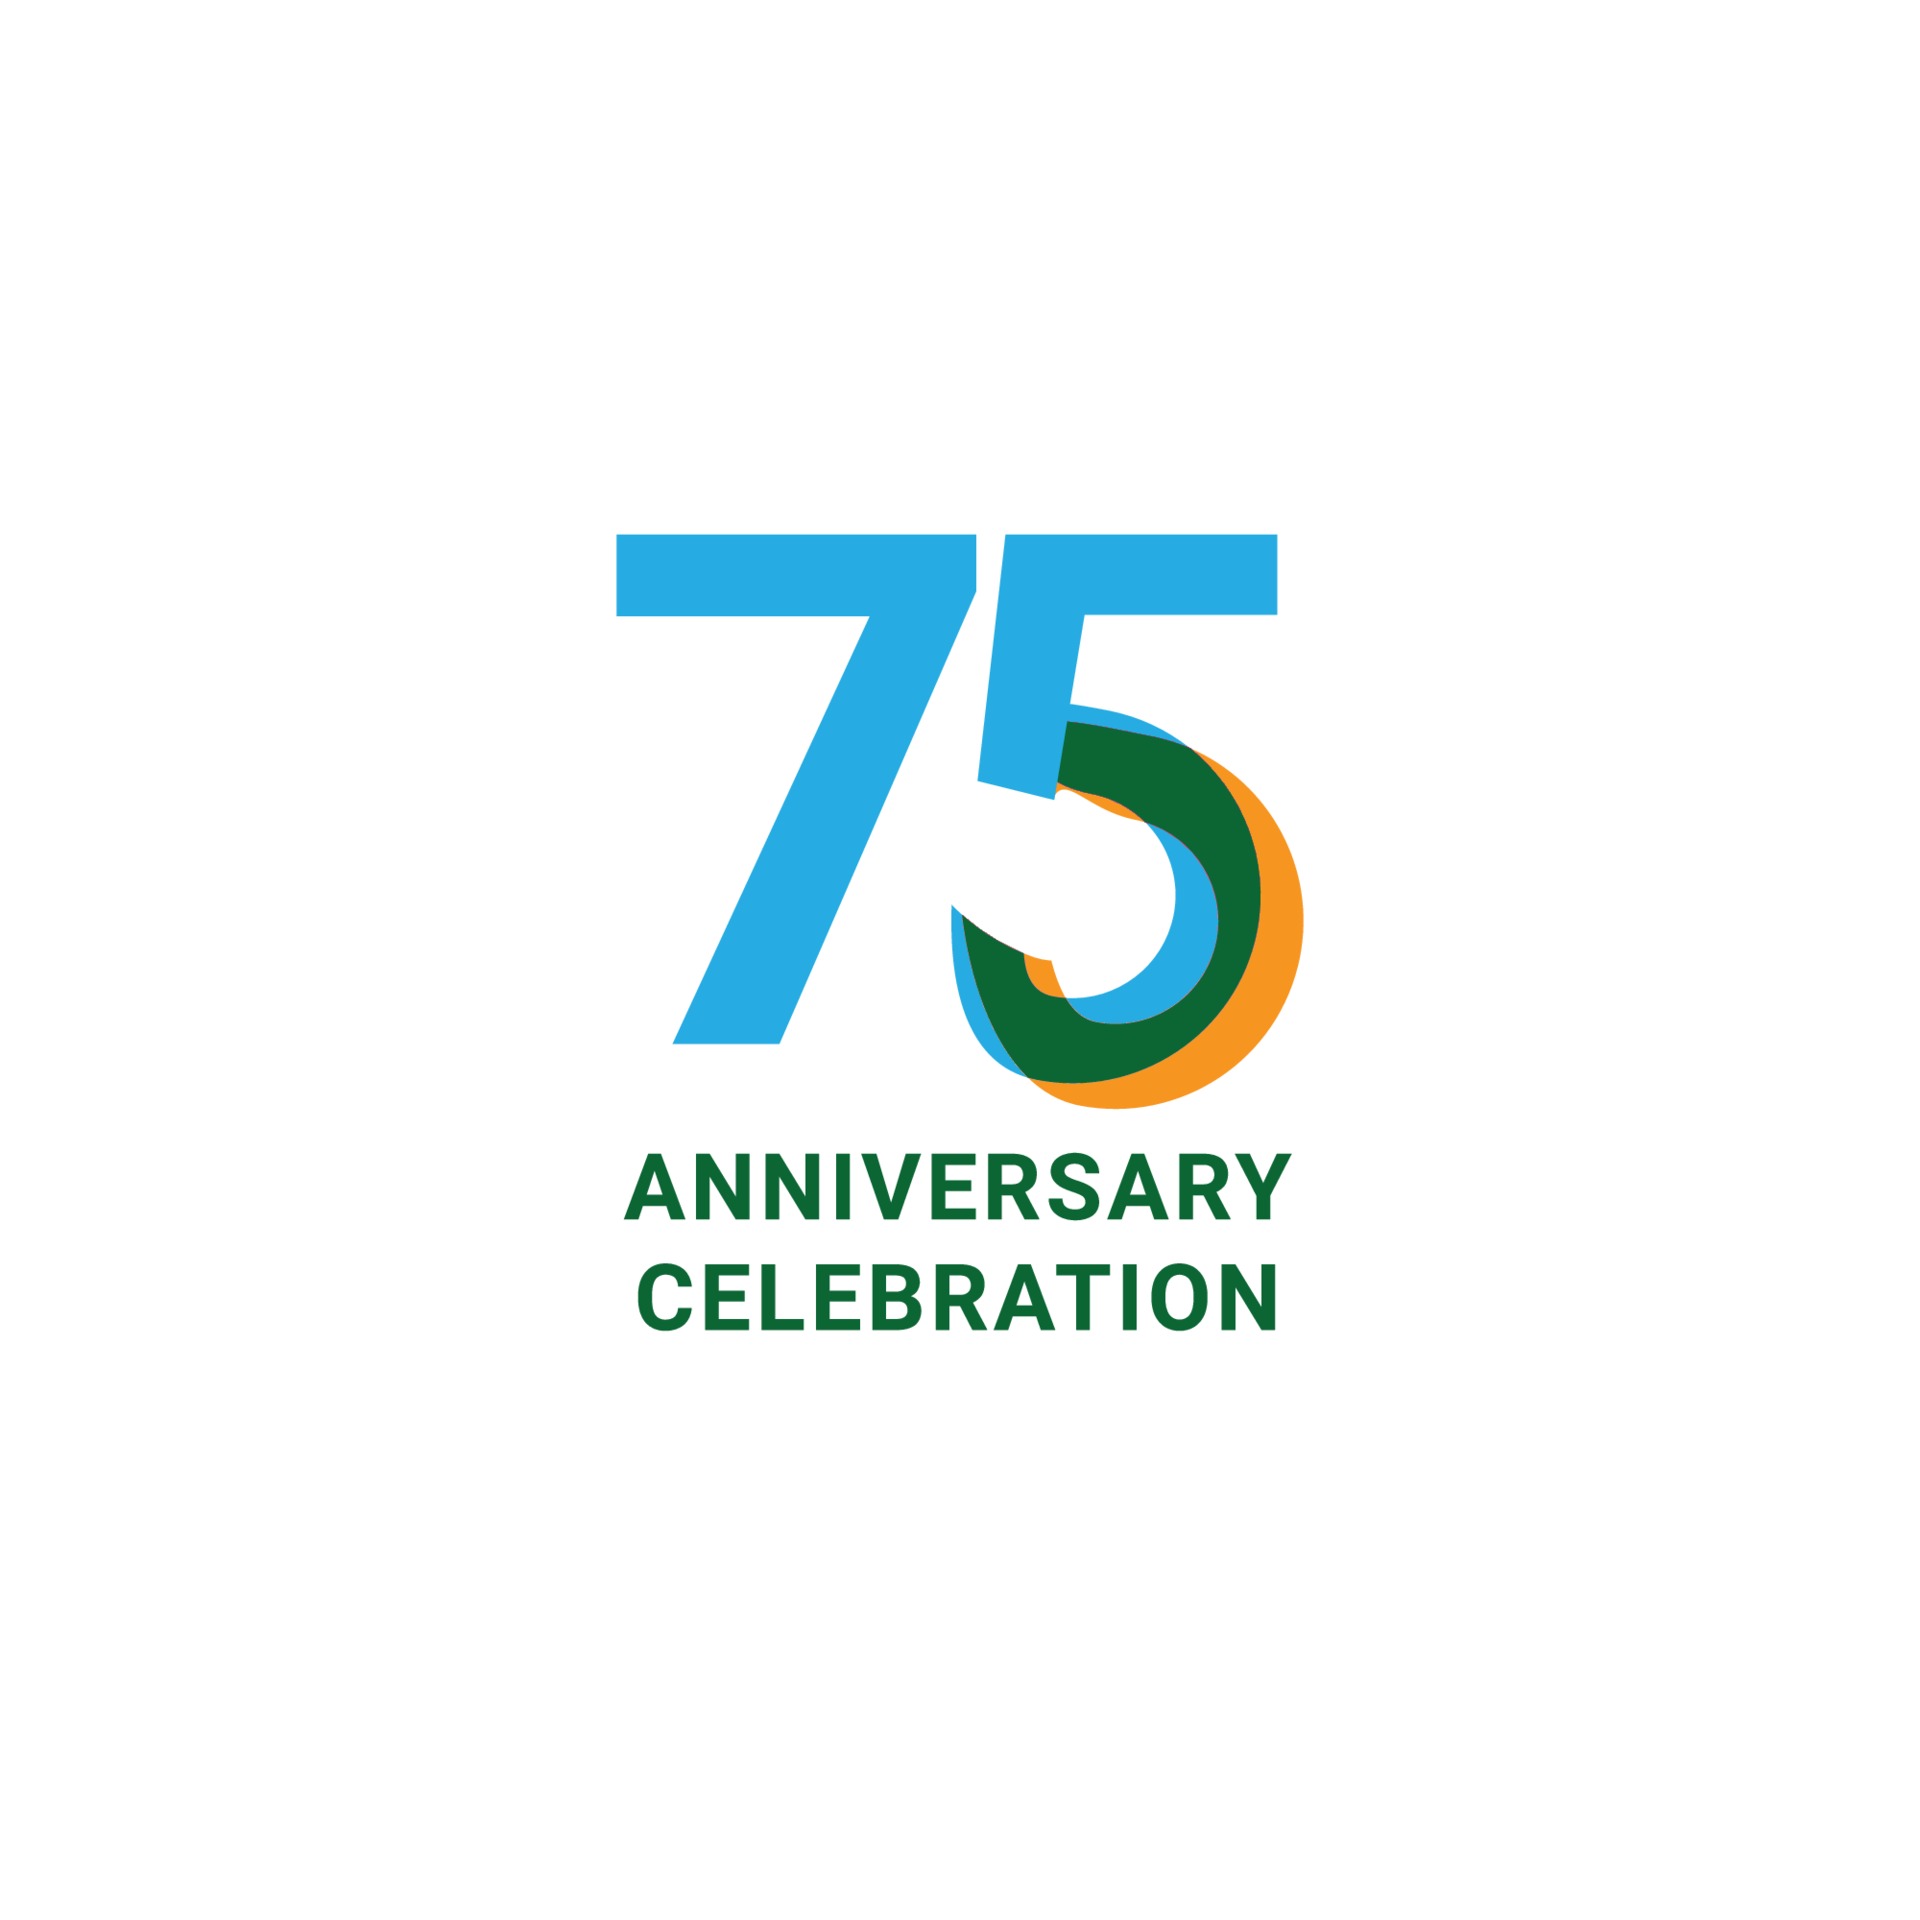 75 Years Anniversary Celebration Vector Template Design Illustration ...